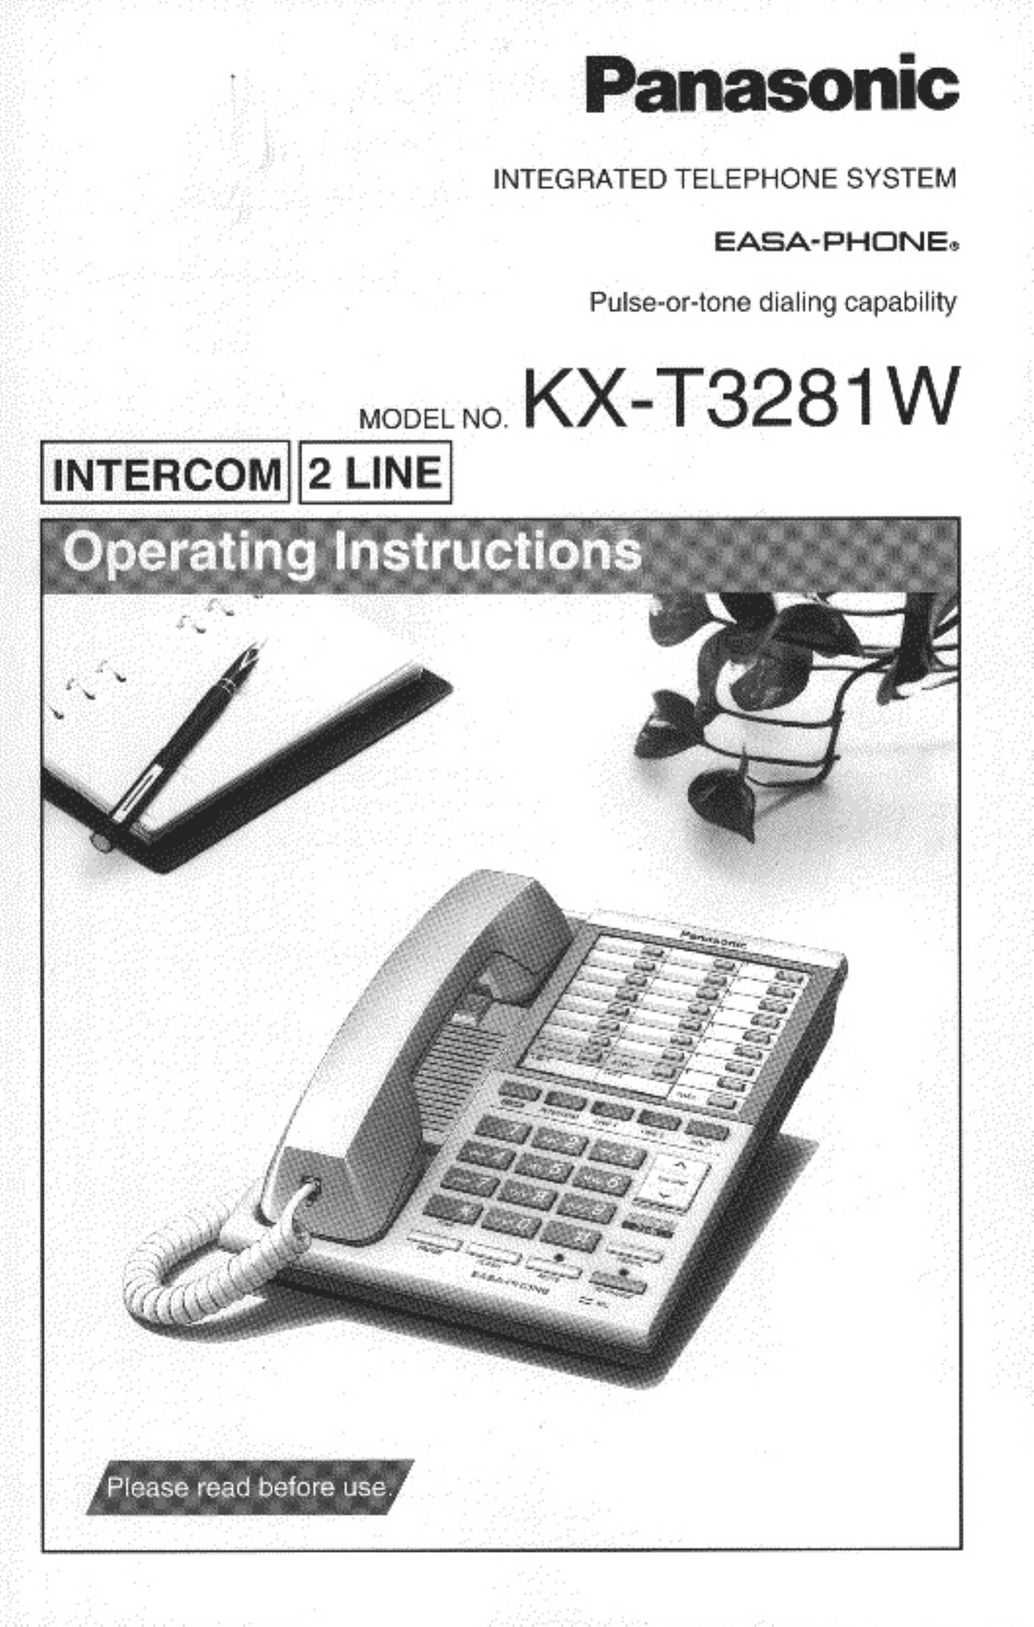 Panasonic KX-T3281W Answering Machine User Manual